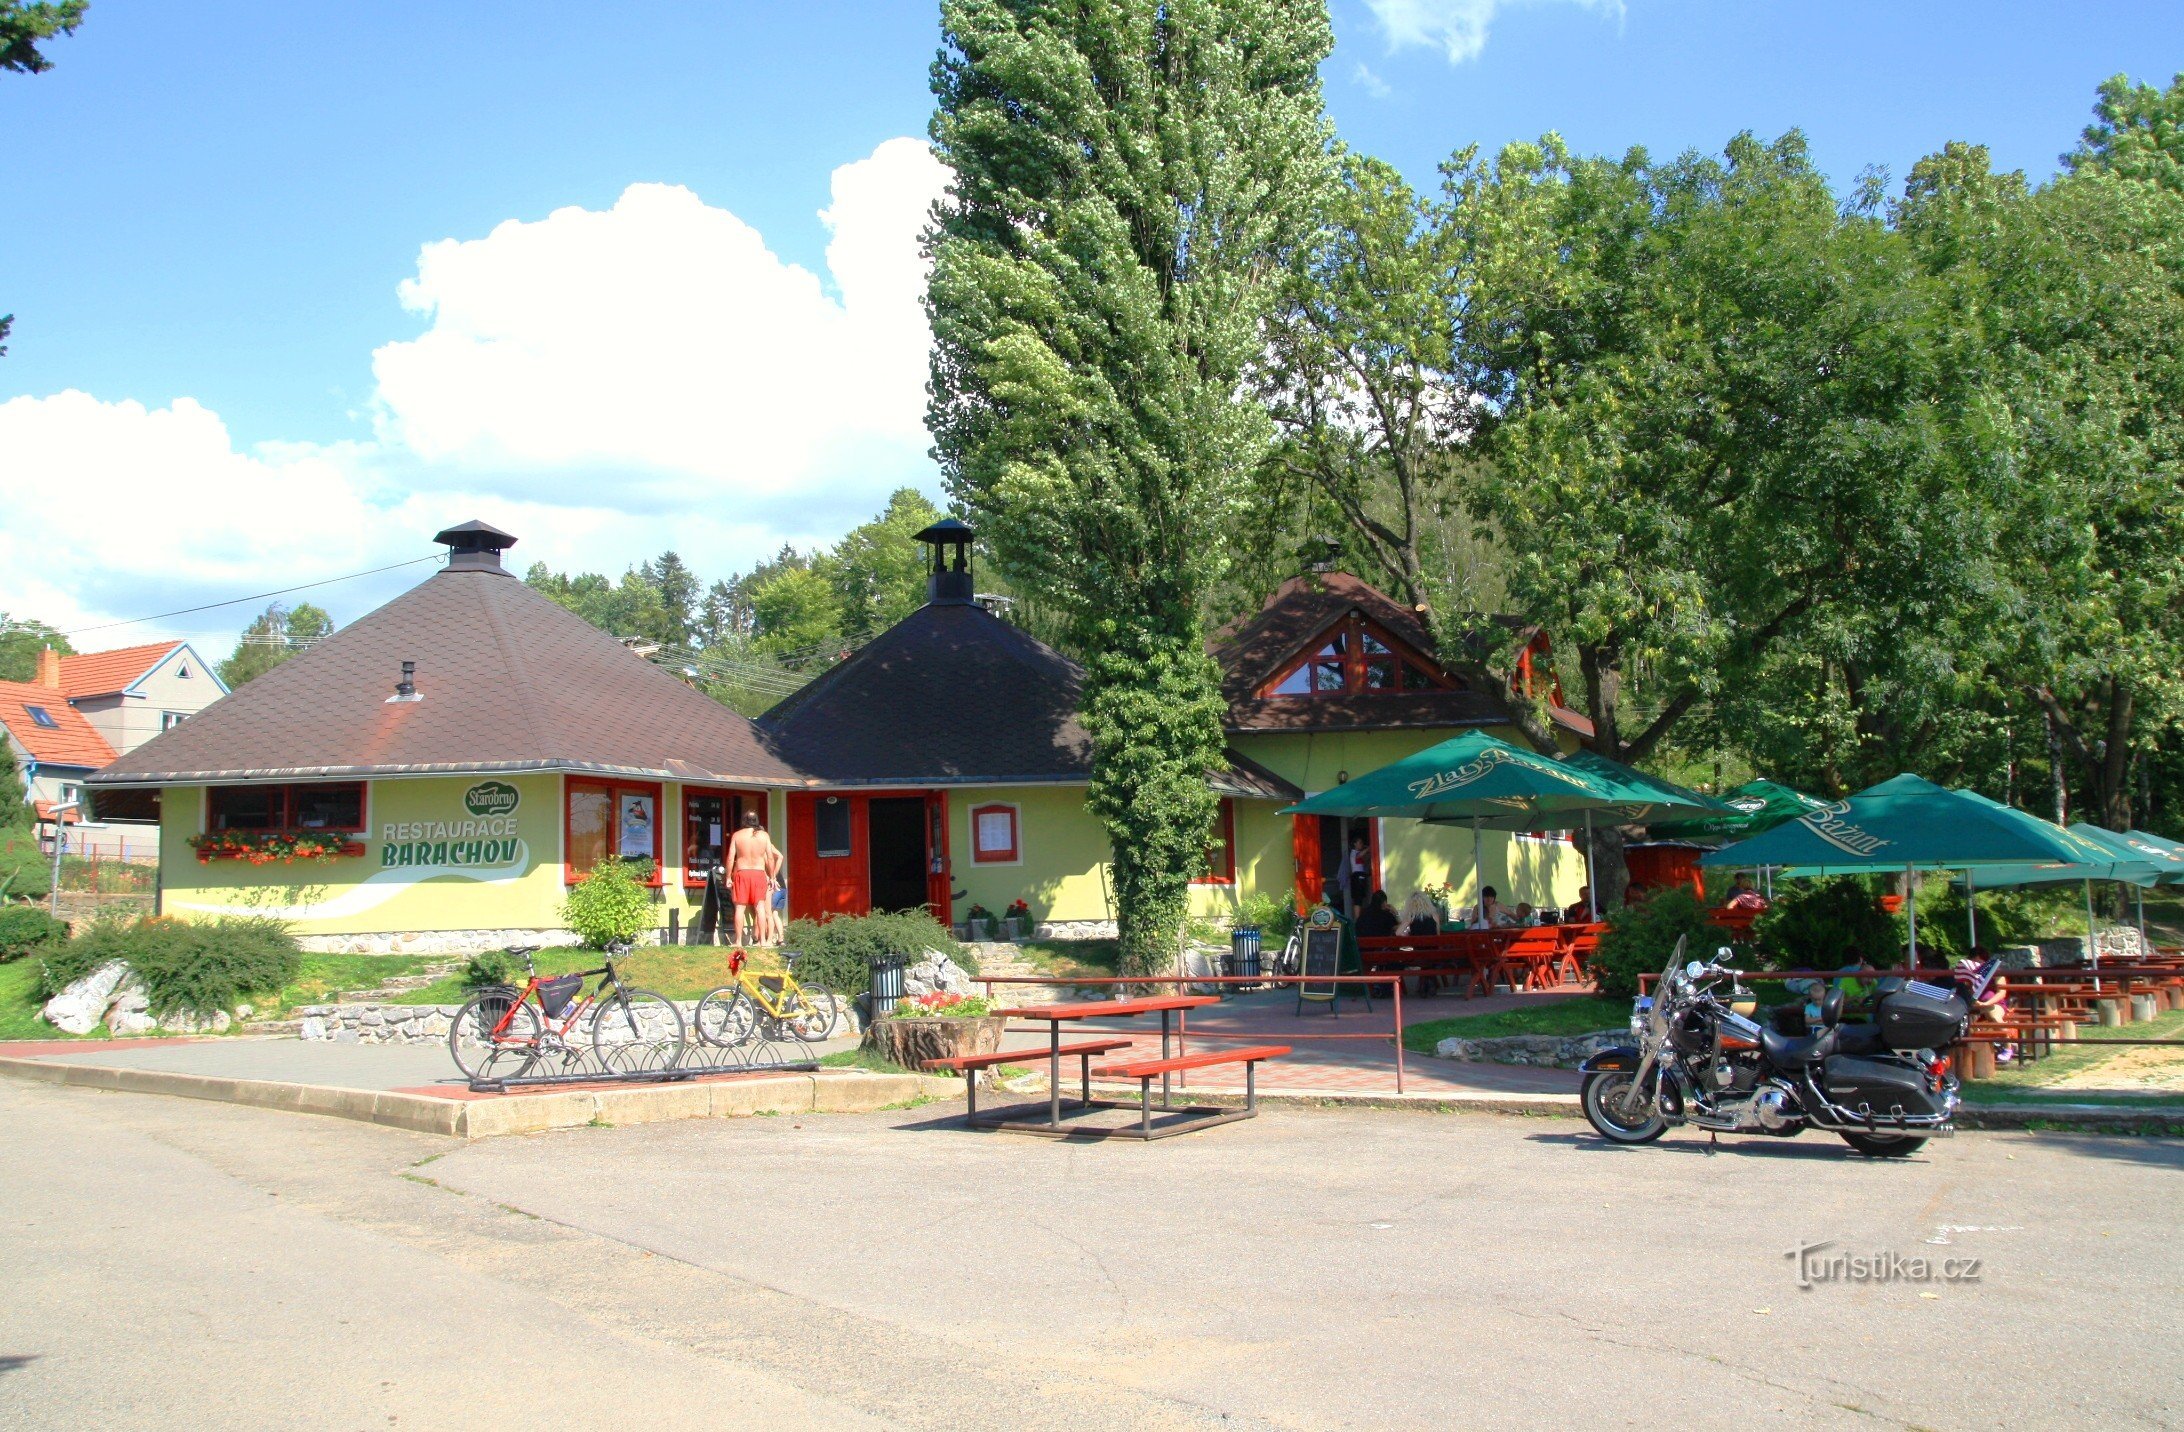 Restaurant in Barachov